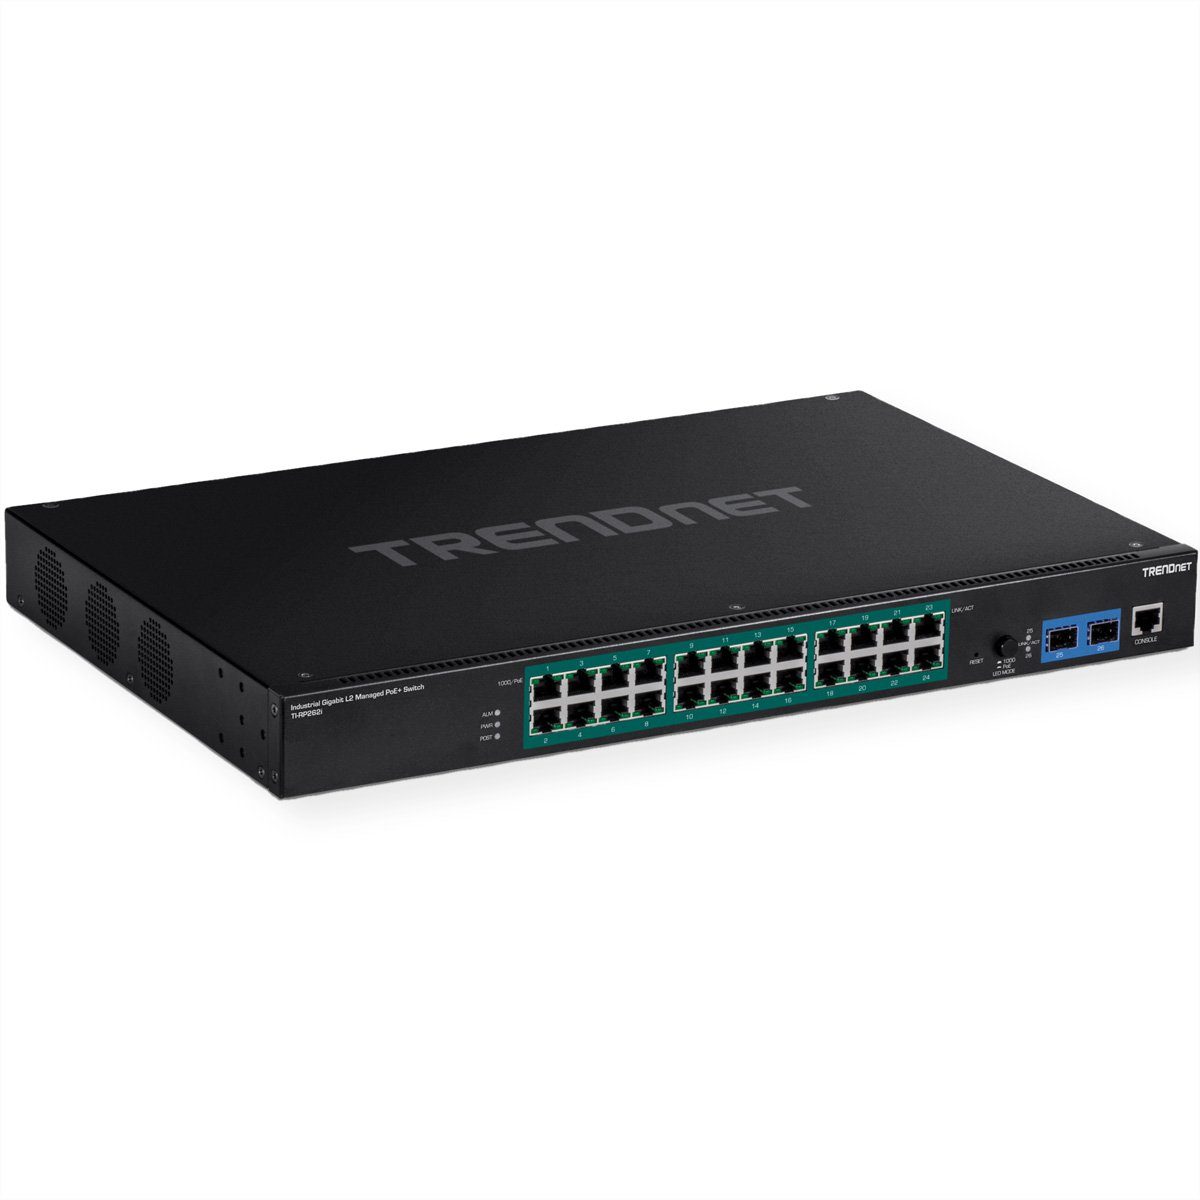 Trendnet TI-RP262i 26-Port Industrial Rackmount PoE+ Switch Gigabit L2 Managed Netzwerk-Switch